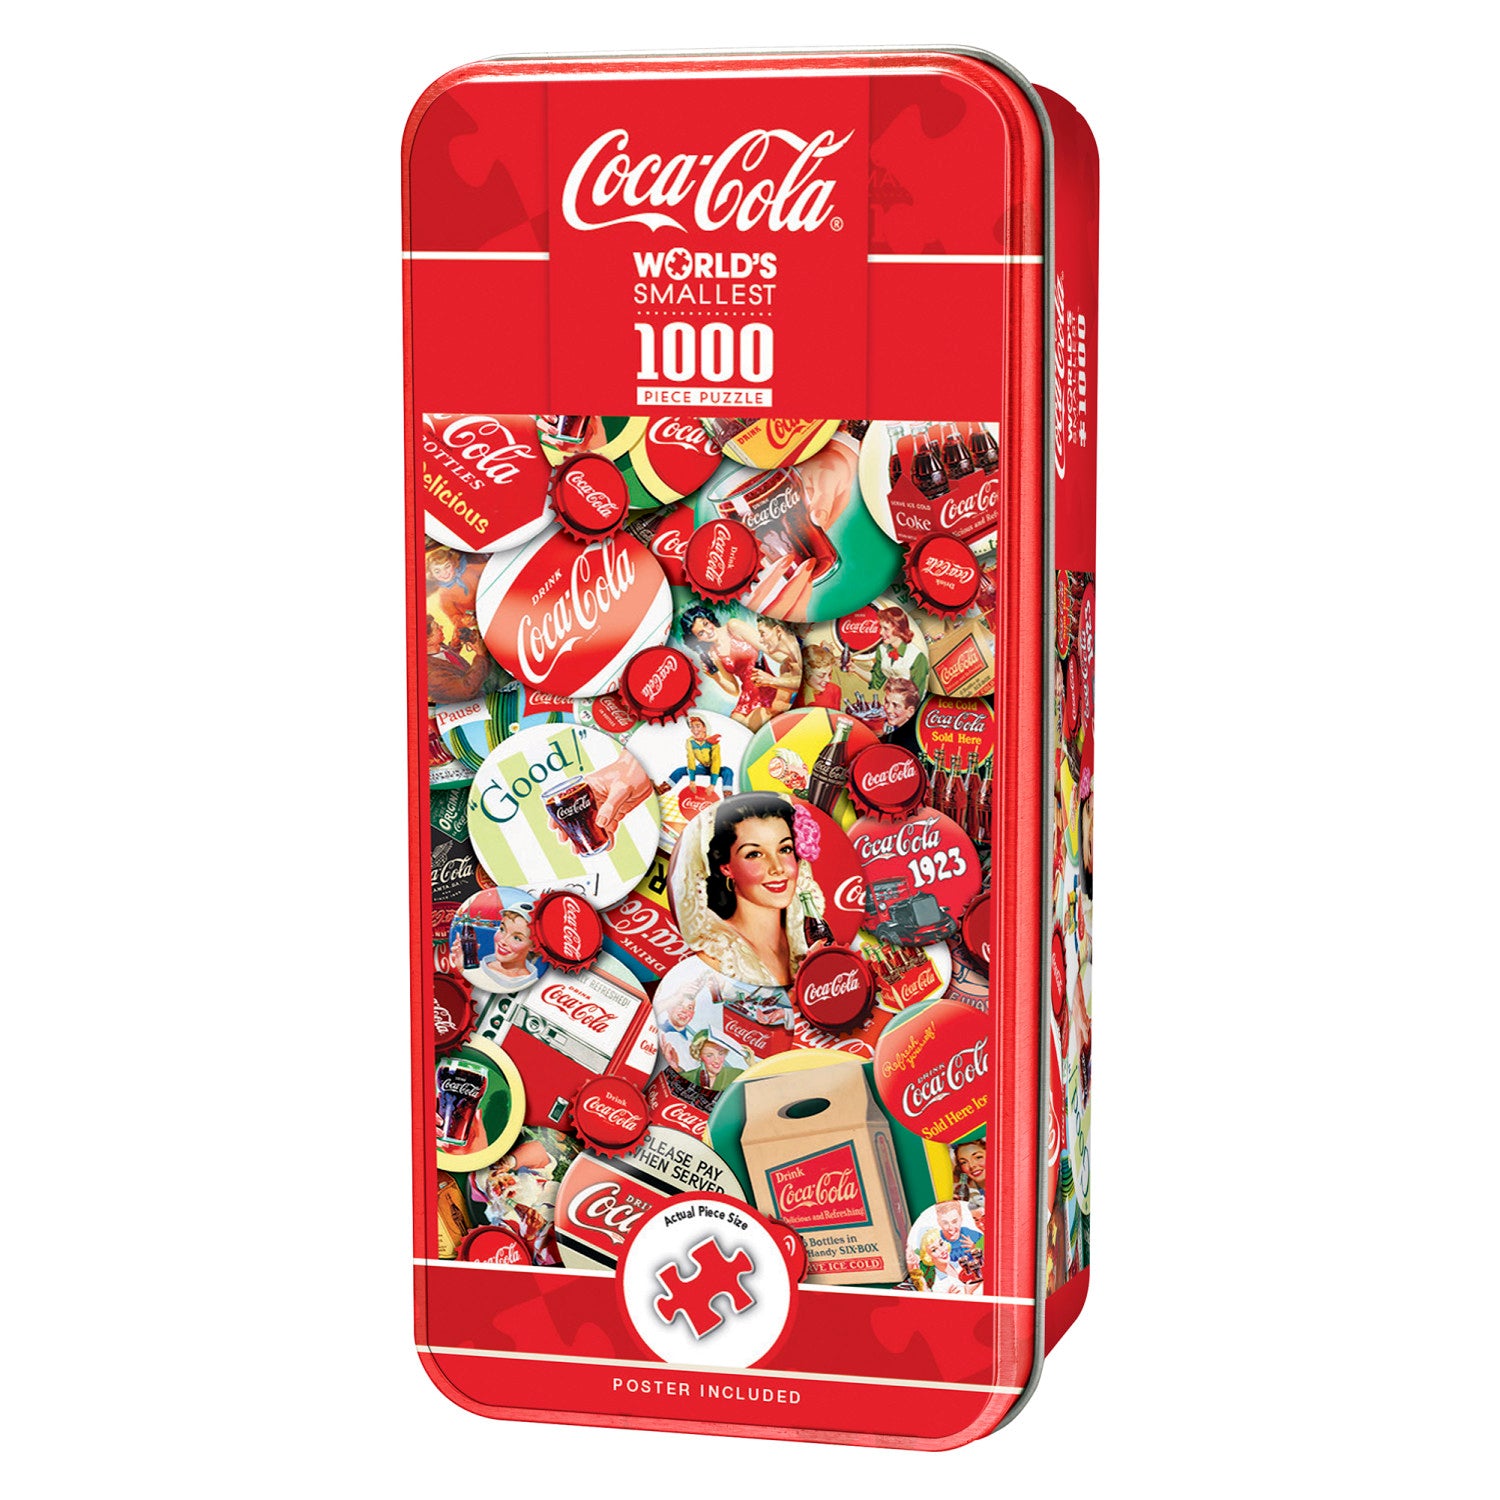 World's Smallest - Coca-Cola Caps 1000 Piece Jigsaw Puzzle